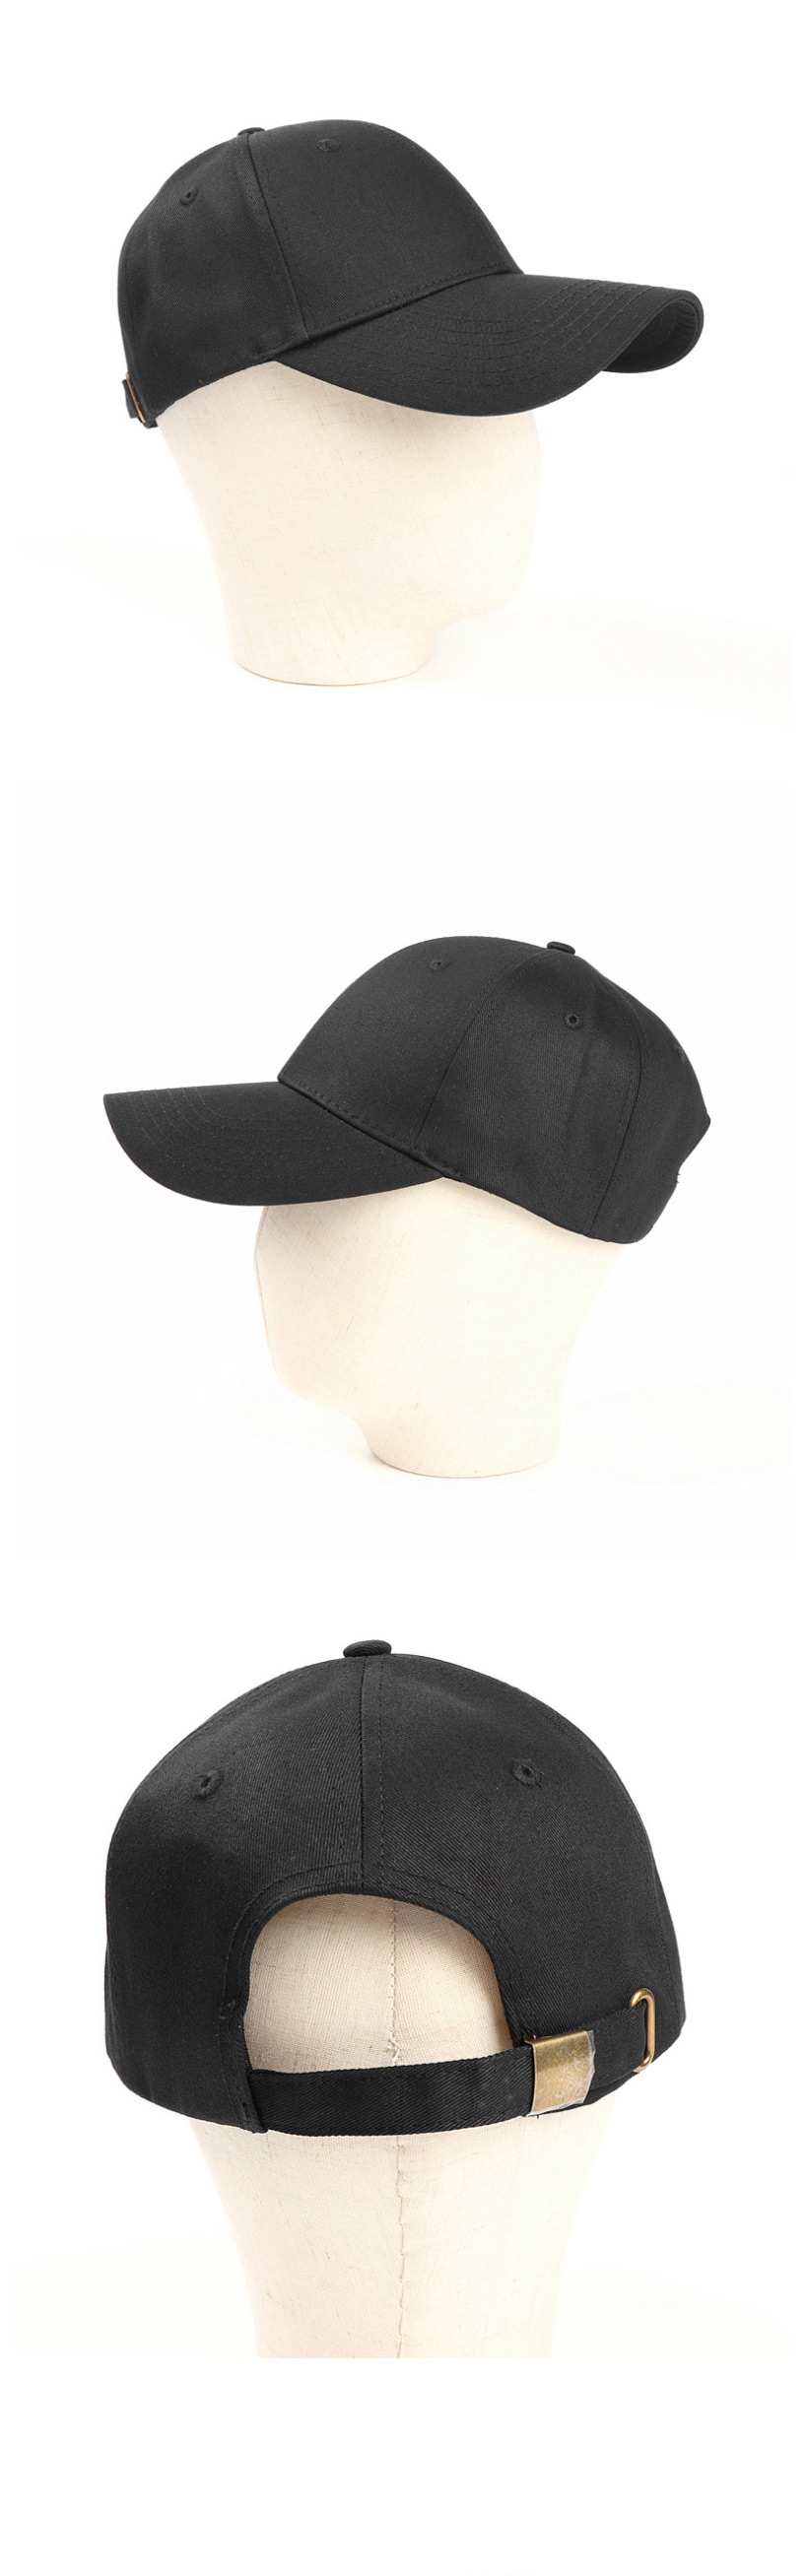 Fashion Turmeric Cotton Hard Top And Long Brim Baseball Cap,Baseball Caps